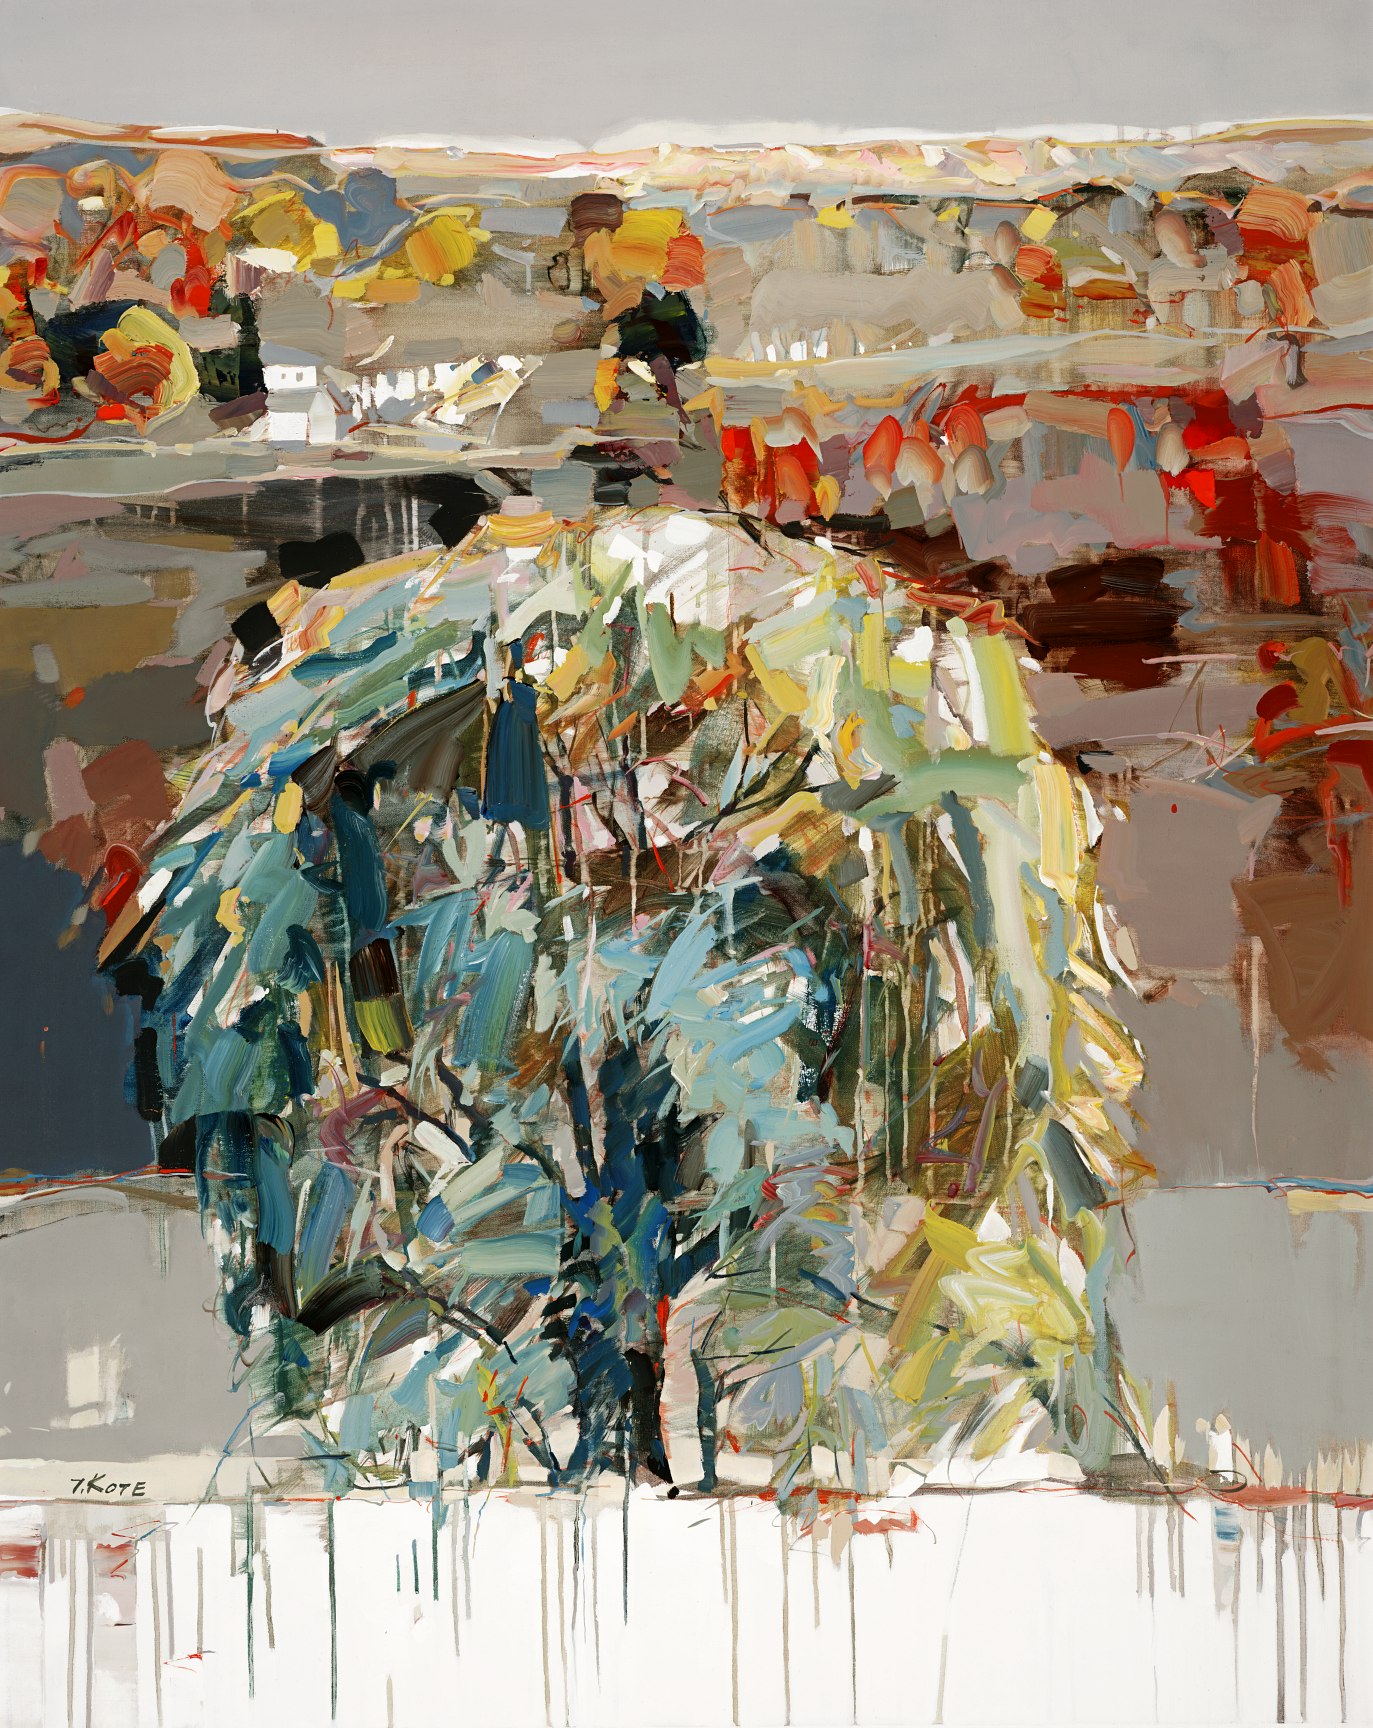 JOSEF KOTE - In Between Dreams - Acrylic on Canvas - 60x48 inches